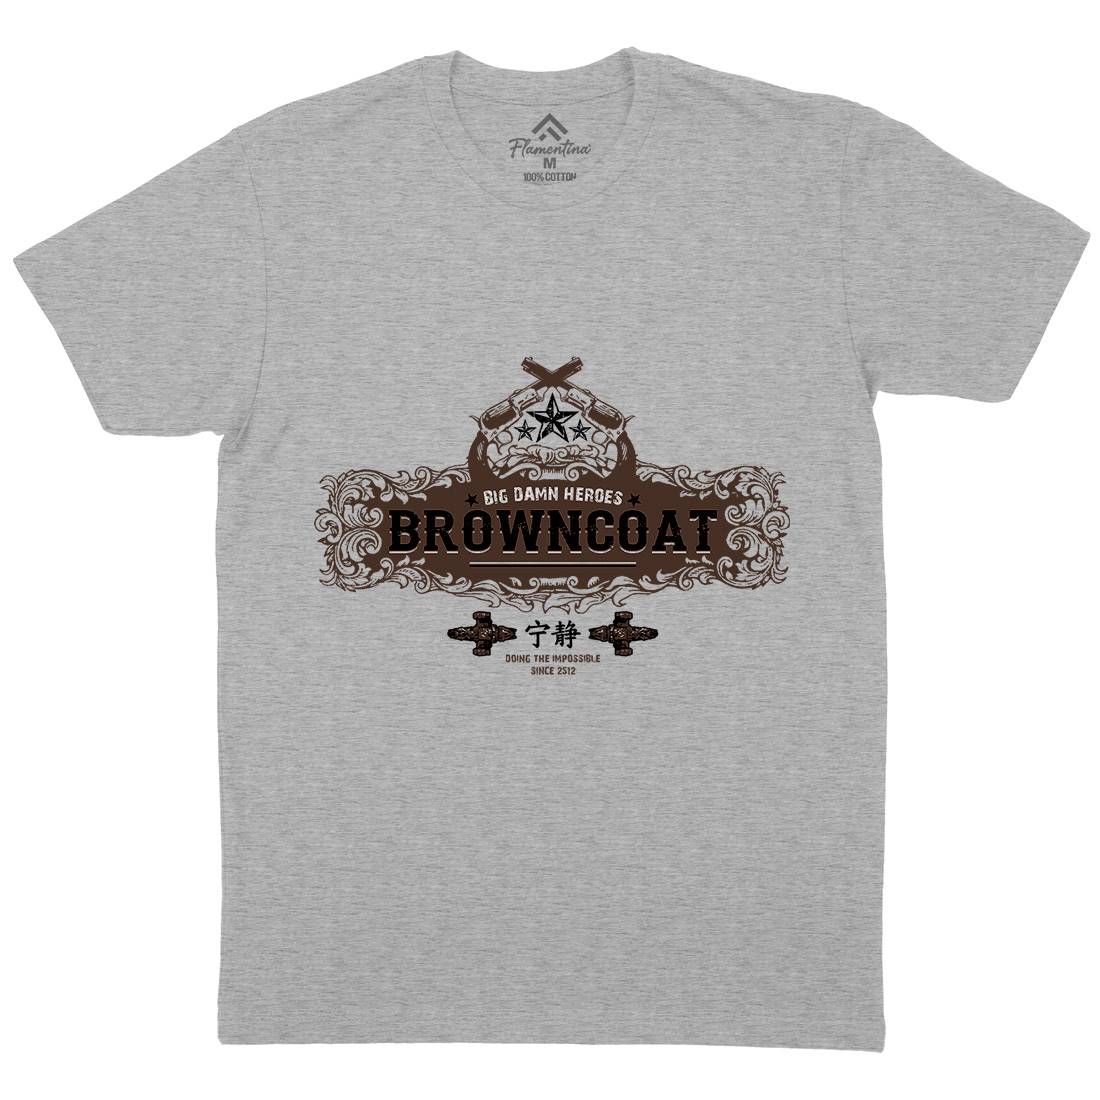 Browncoat Mens Crew Neck T-Shirt Space D350